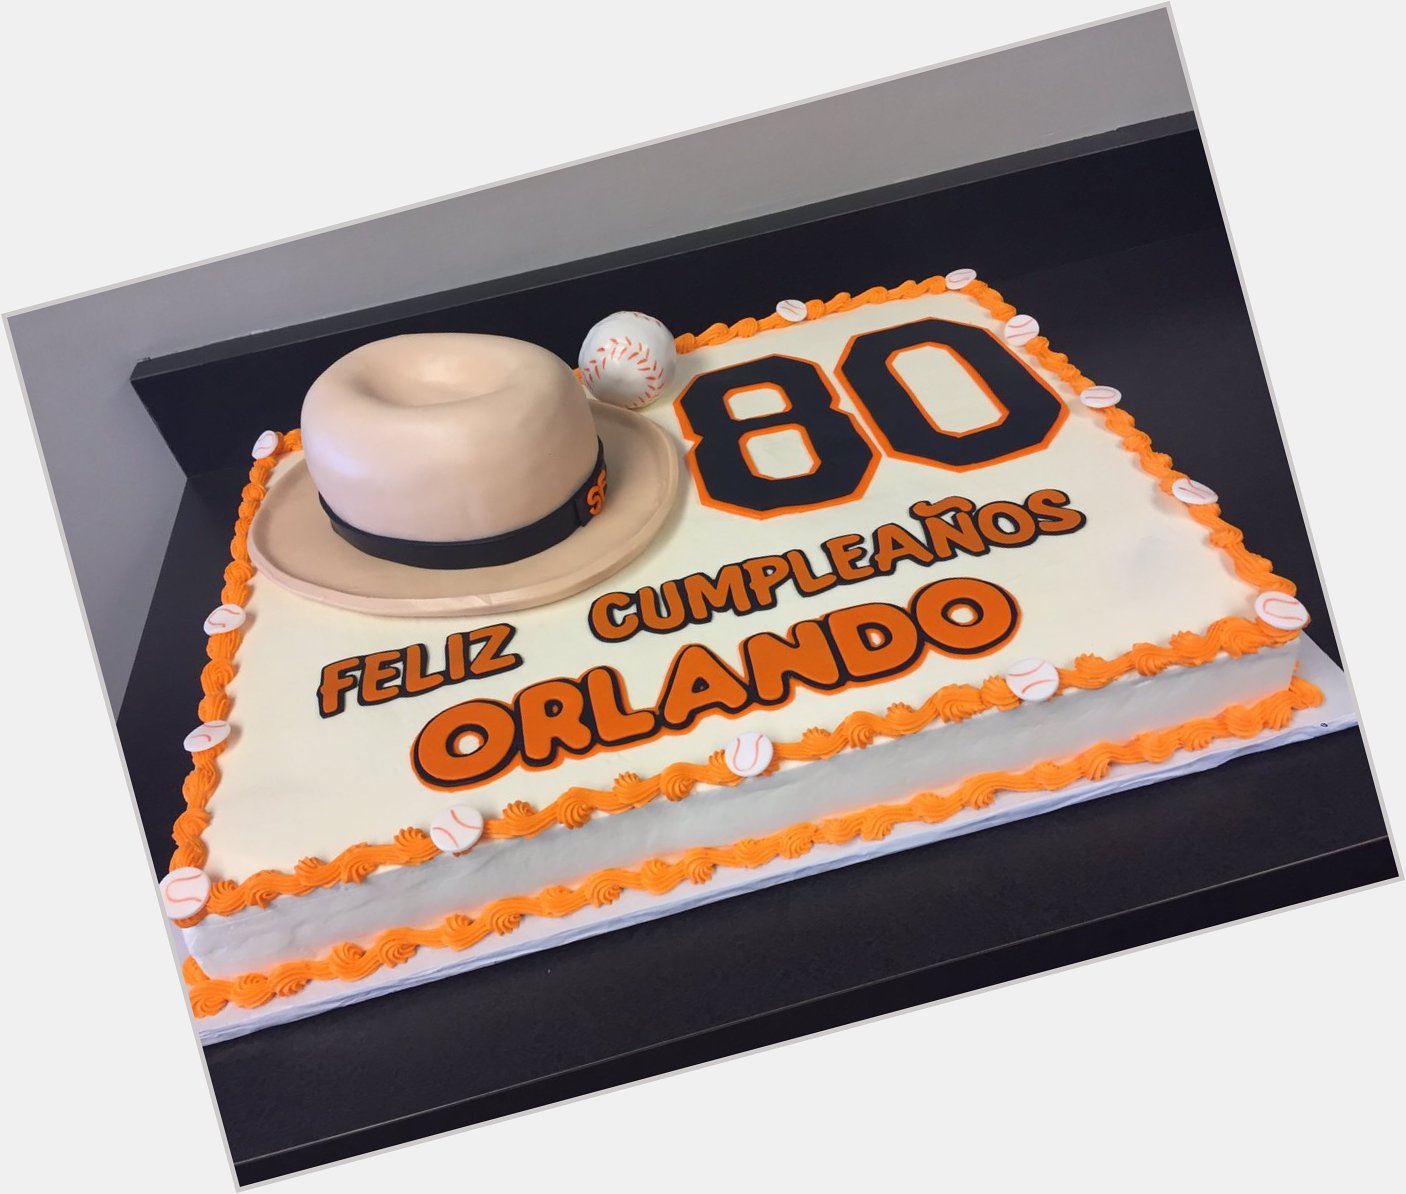 Happy birthday Orlando Cepeda! (Rumor is the hat is a giant Rice Krispie treat.) 